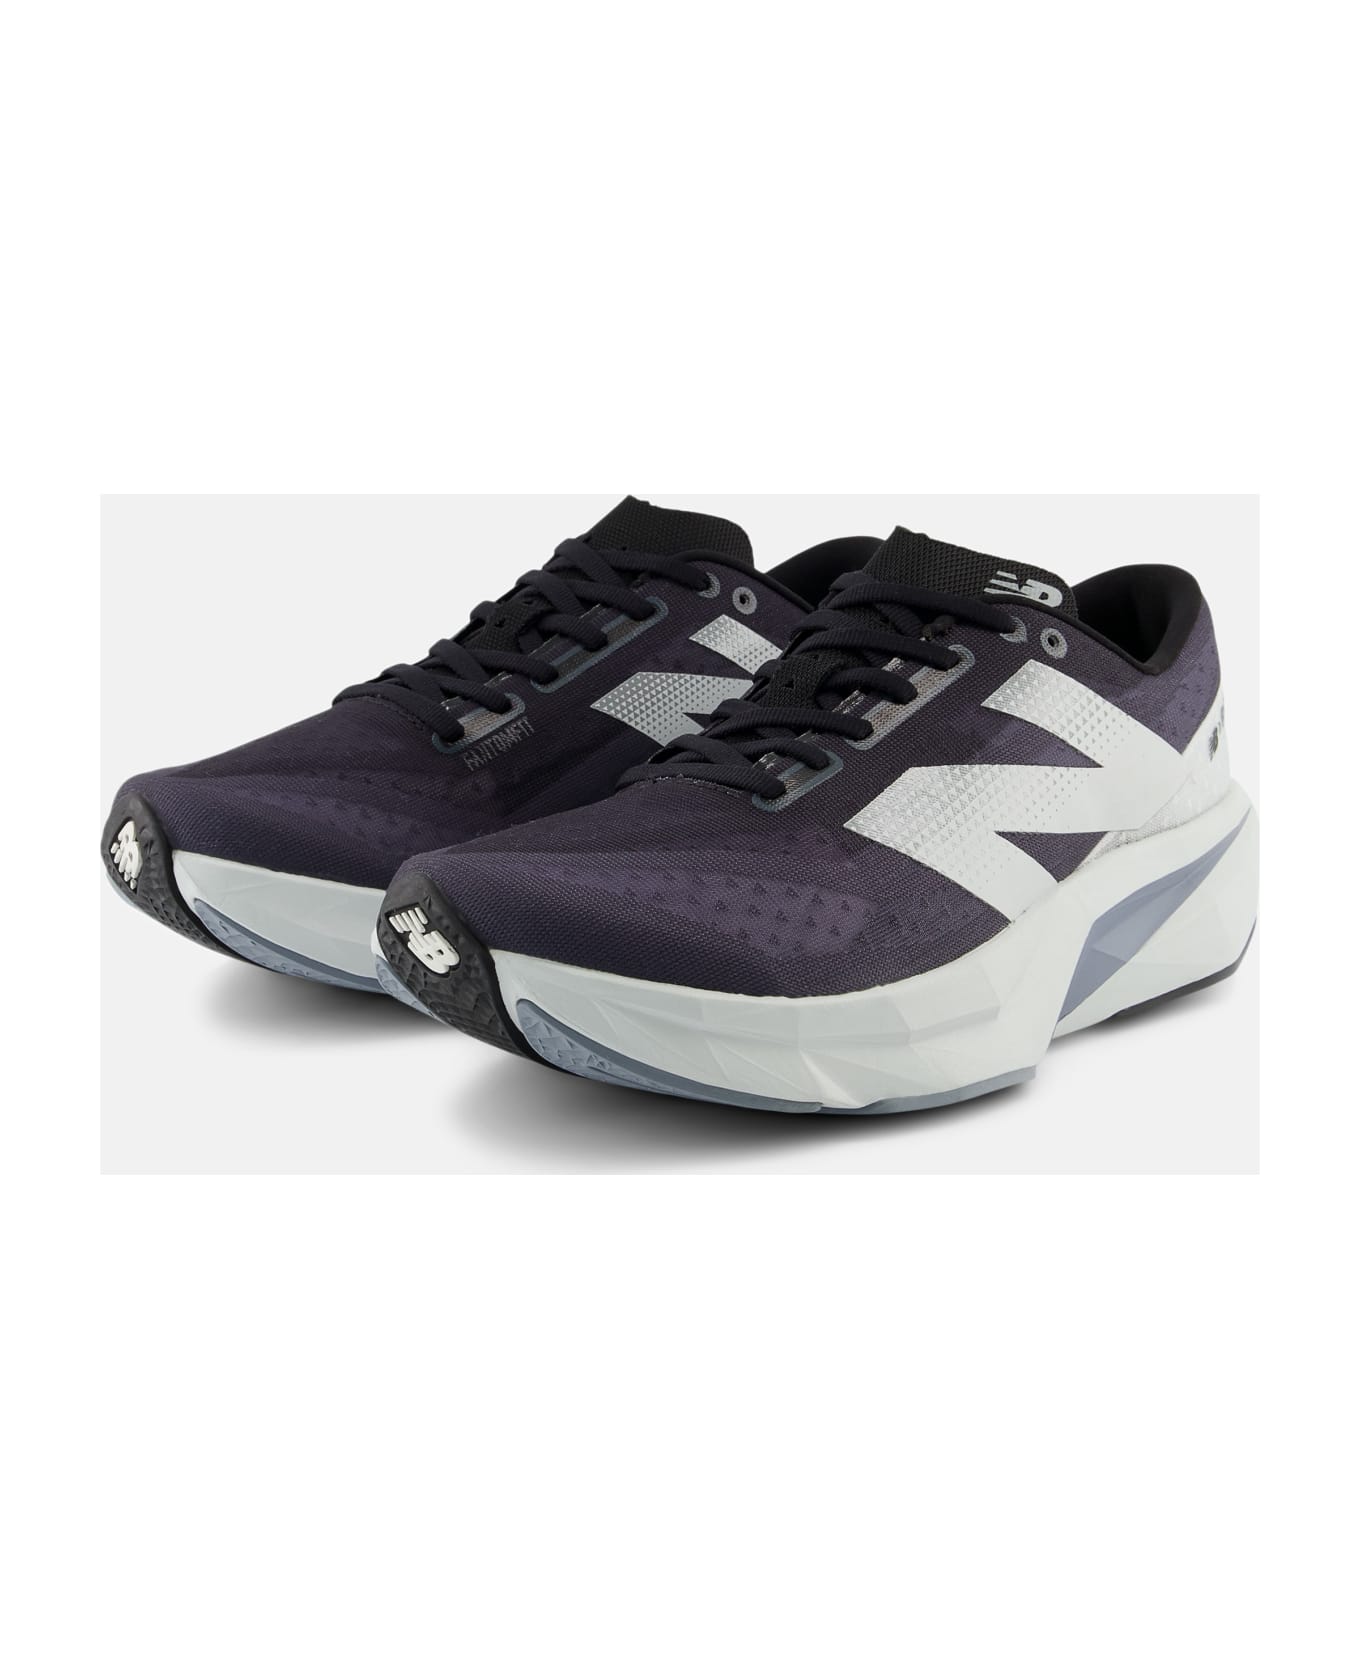 New Balance Rebel V4 Sneakers - Grey